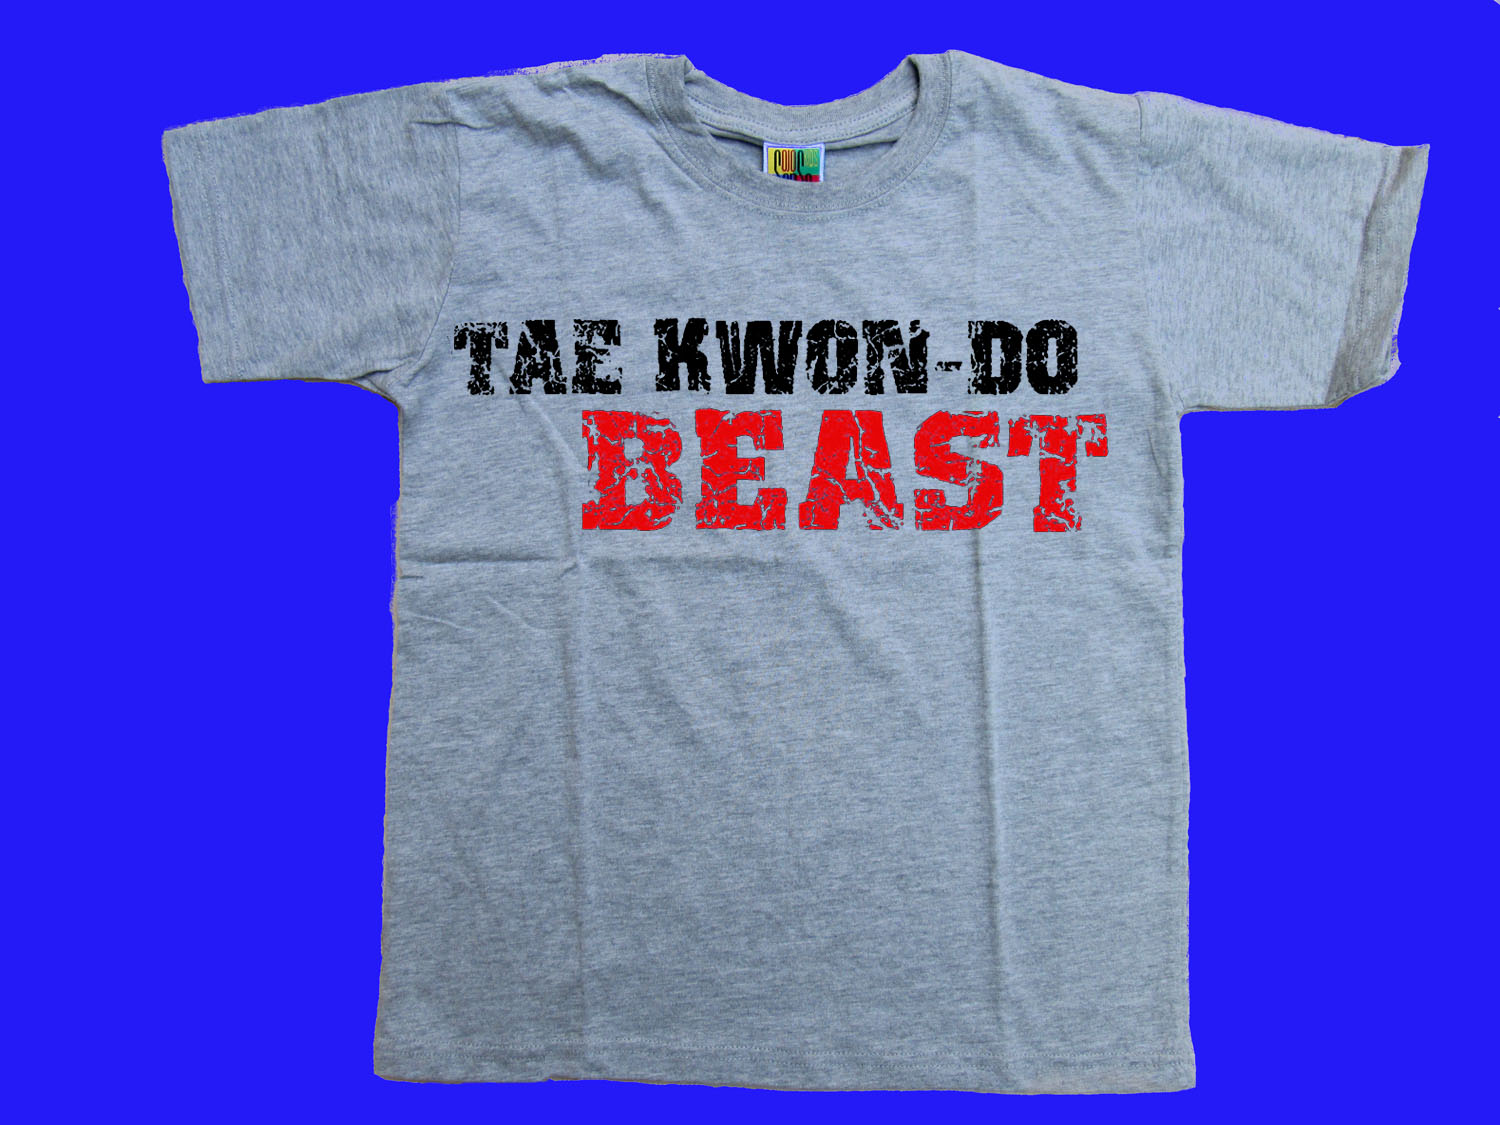 Taekwondo beast children t-shirt